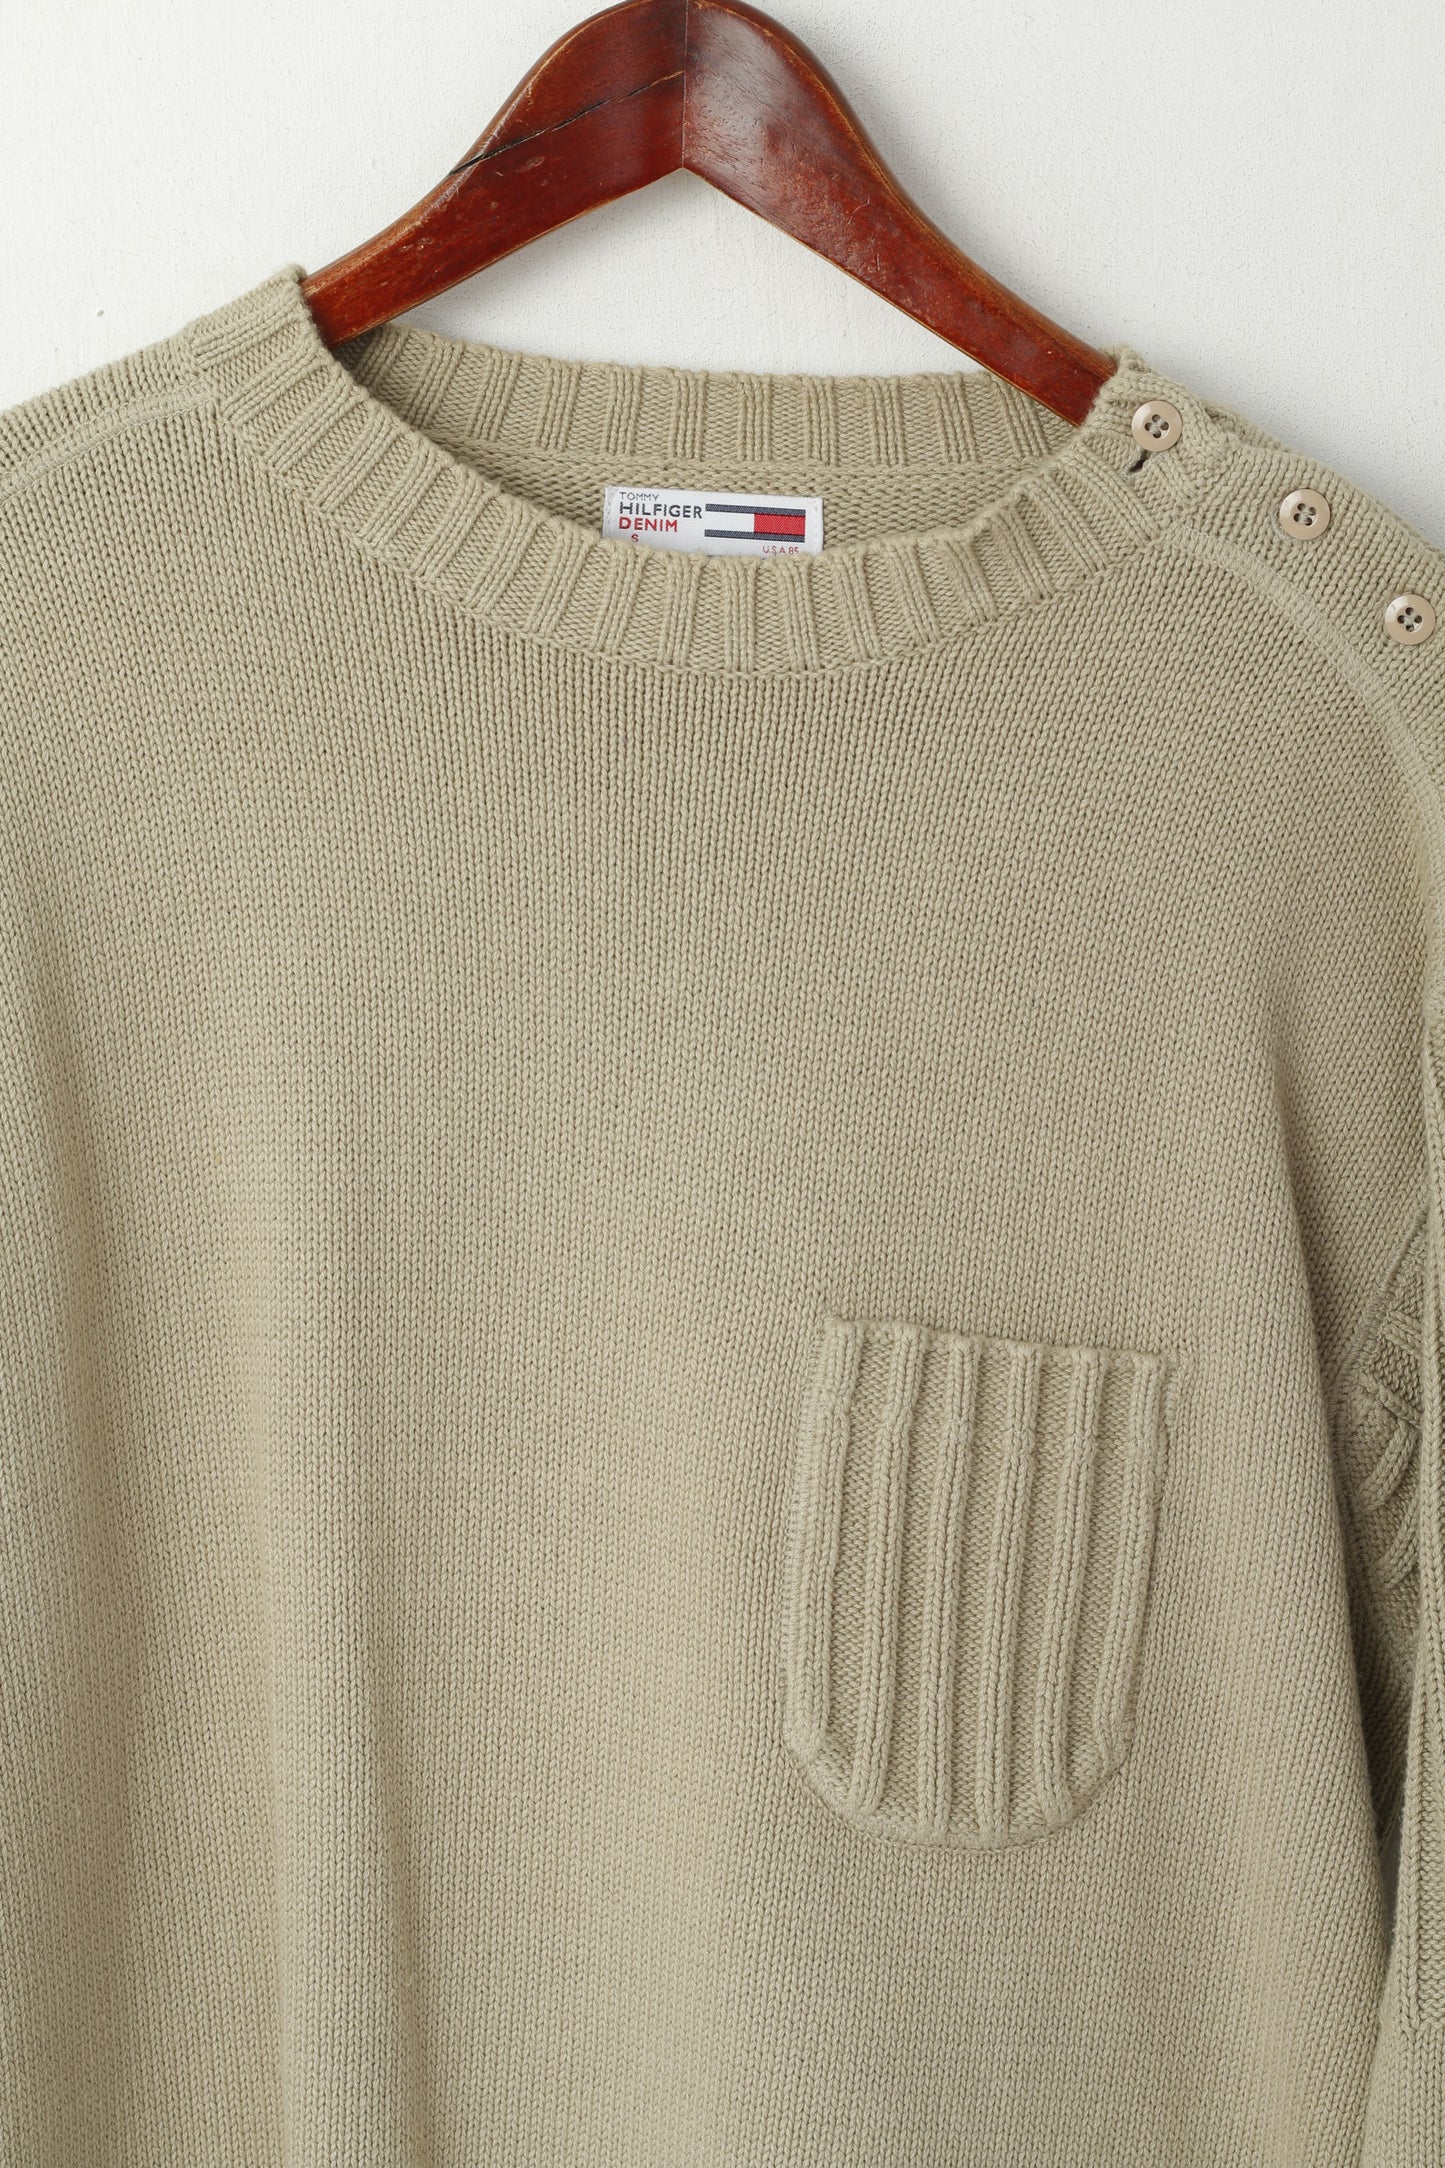 Tommy Hilfiger Denim Men S Jumper Beige CottonCrew Neck Classic Sweater